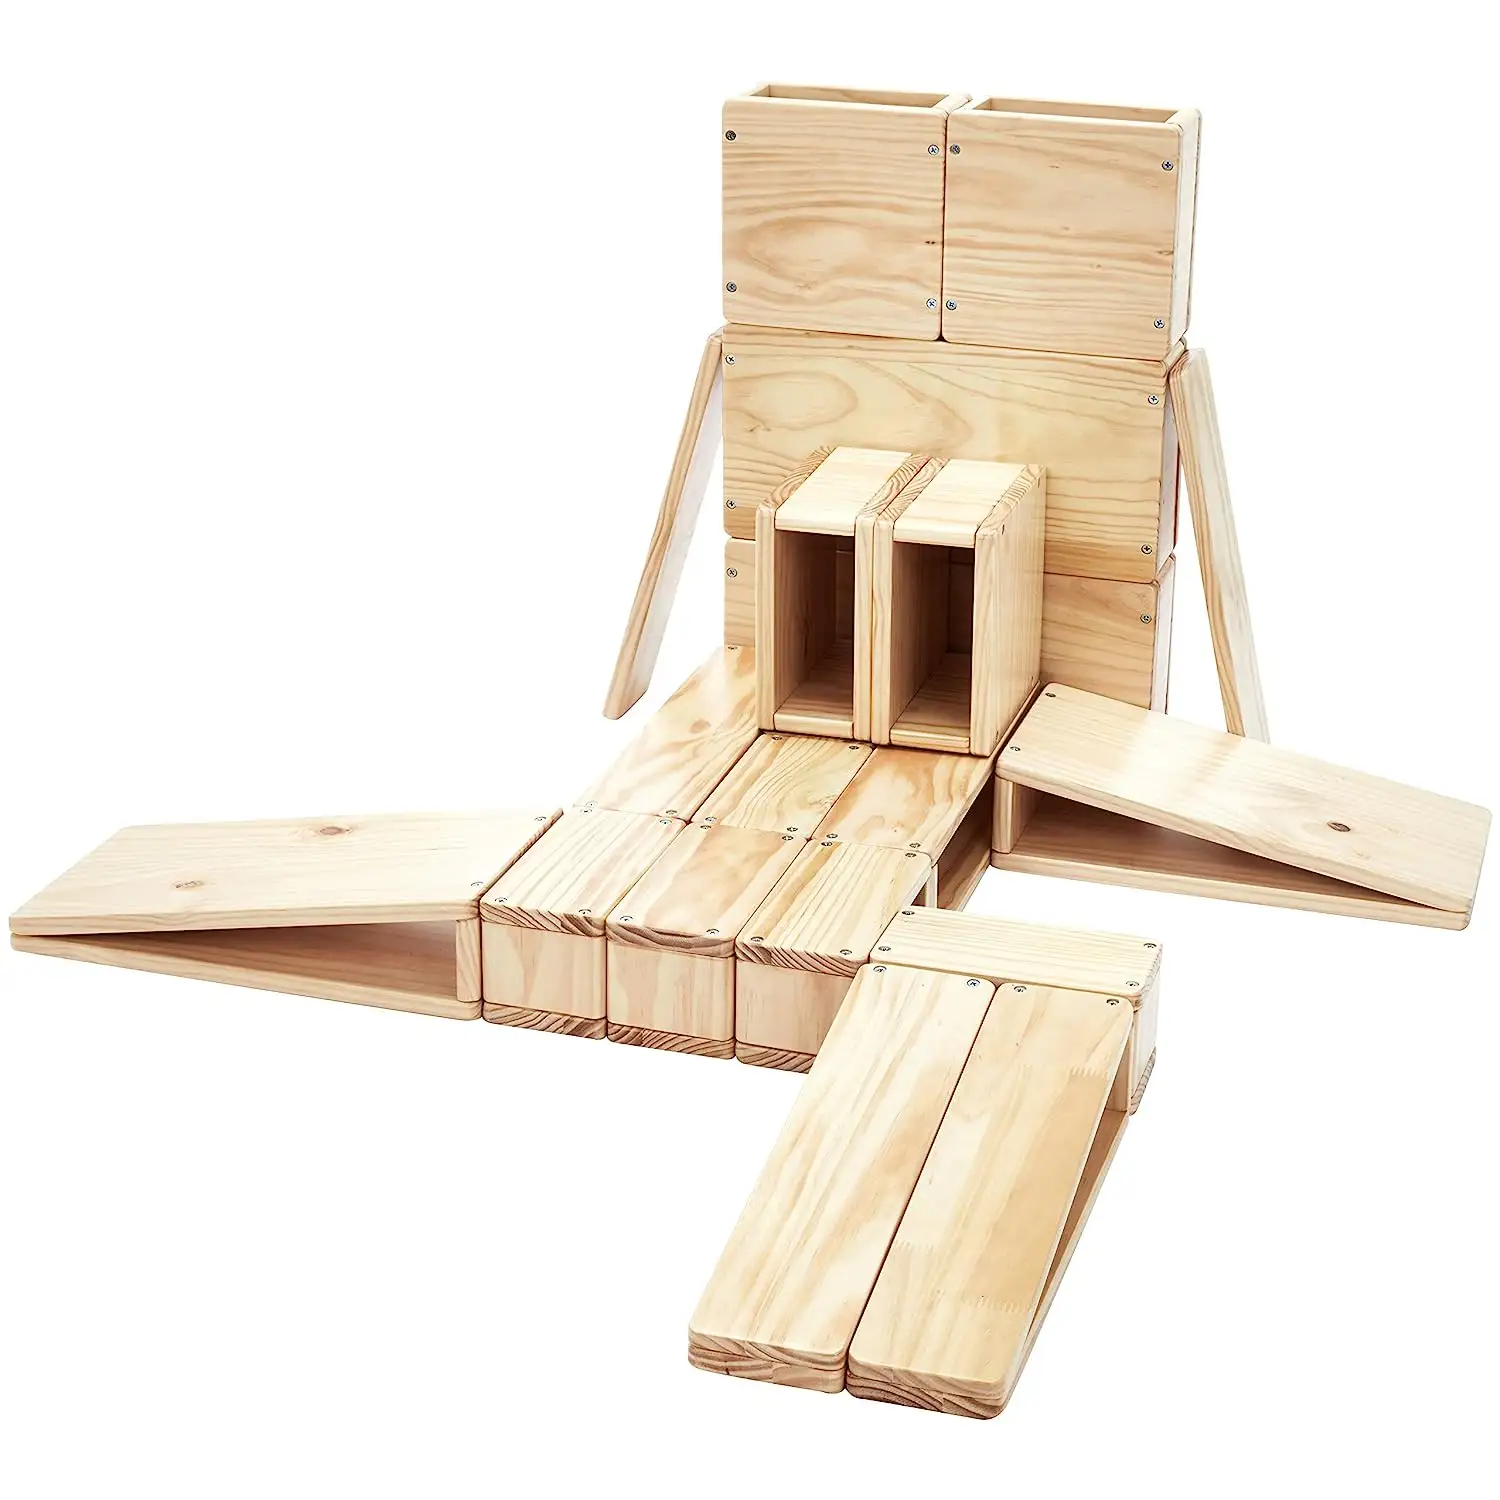 Basics Over-Sized Hollow Wooden Building Block Set for Kids, Natural, 20-Piece Set